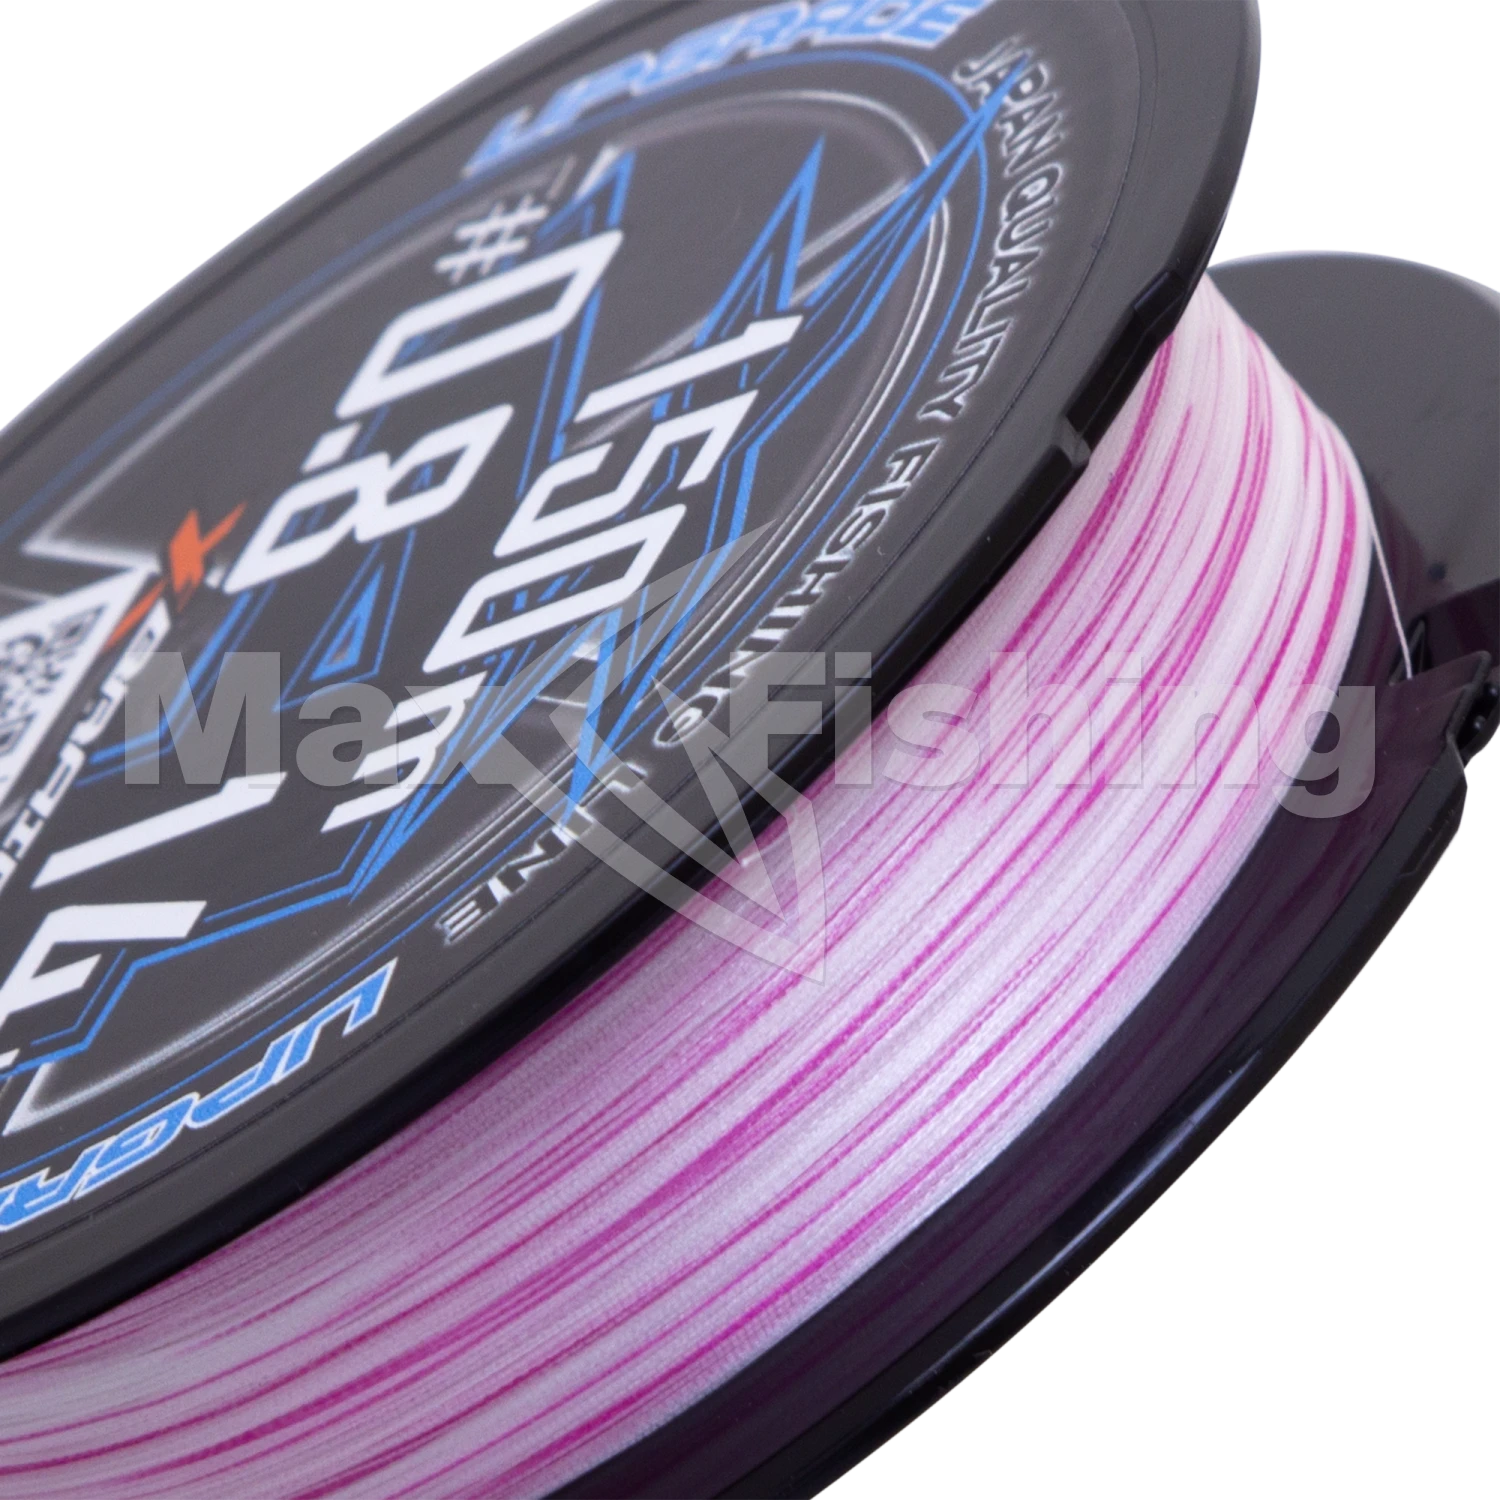 Шнур плетеный YGK X-Braid Upgrade PE X4 #0,8 0,148мм 150м (pink/white)